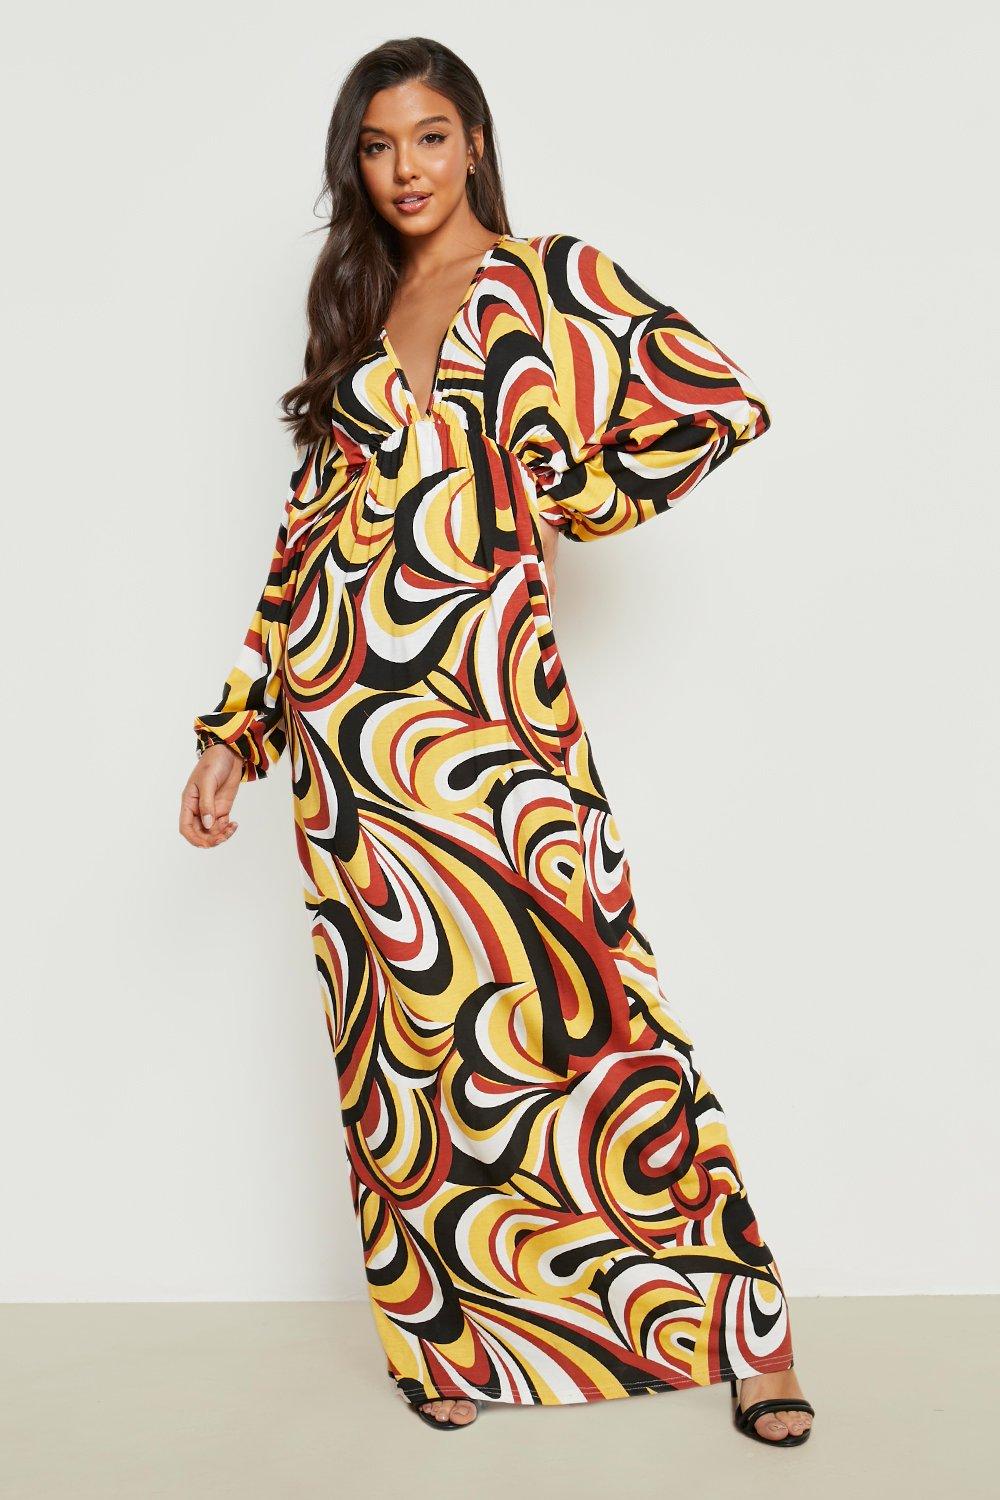 70s Dresses – Disco Dress, Hippie Dress, Caftan Dress Womens Abstract Print Batwing Maxi Dress - Yellow - 14 $32.00 AT vintagedancer.com